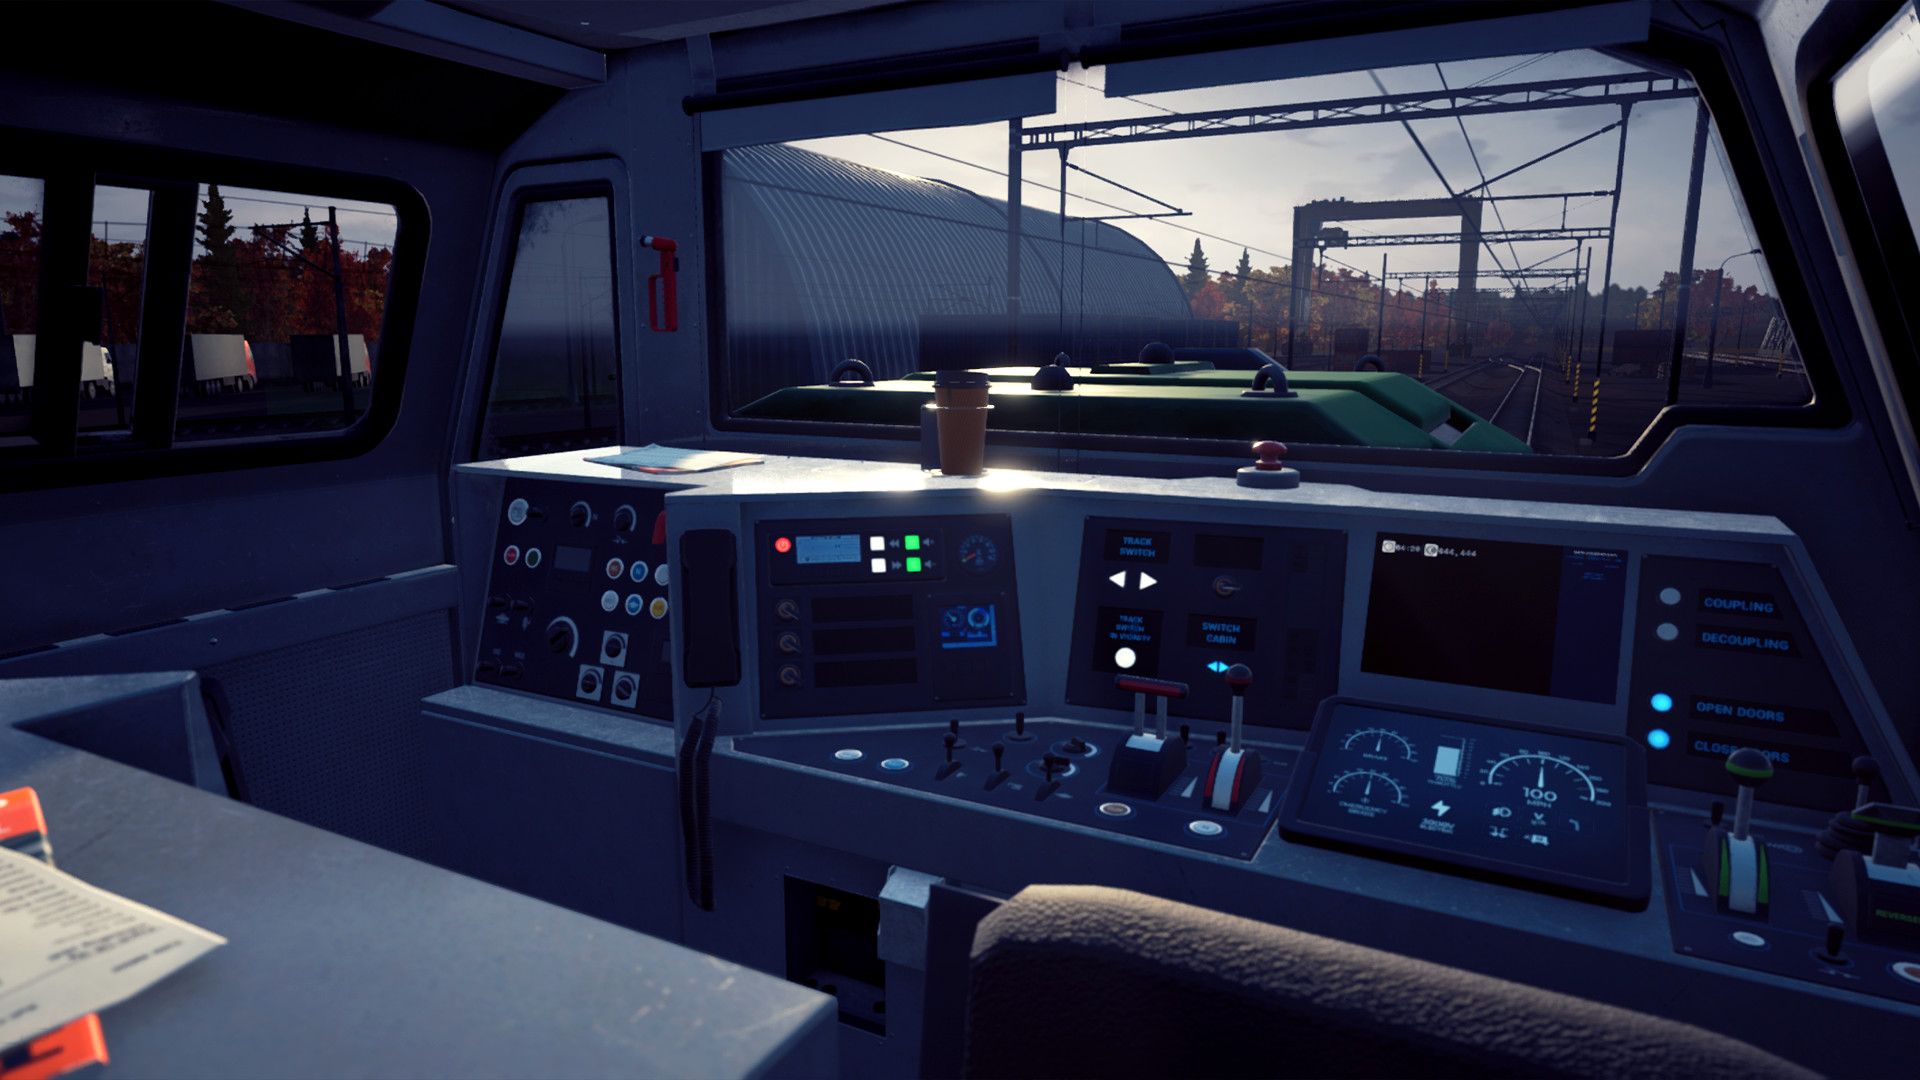 Train Life: A Railway Simulator Steam Account 4.52 $